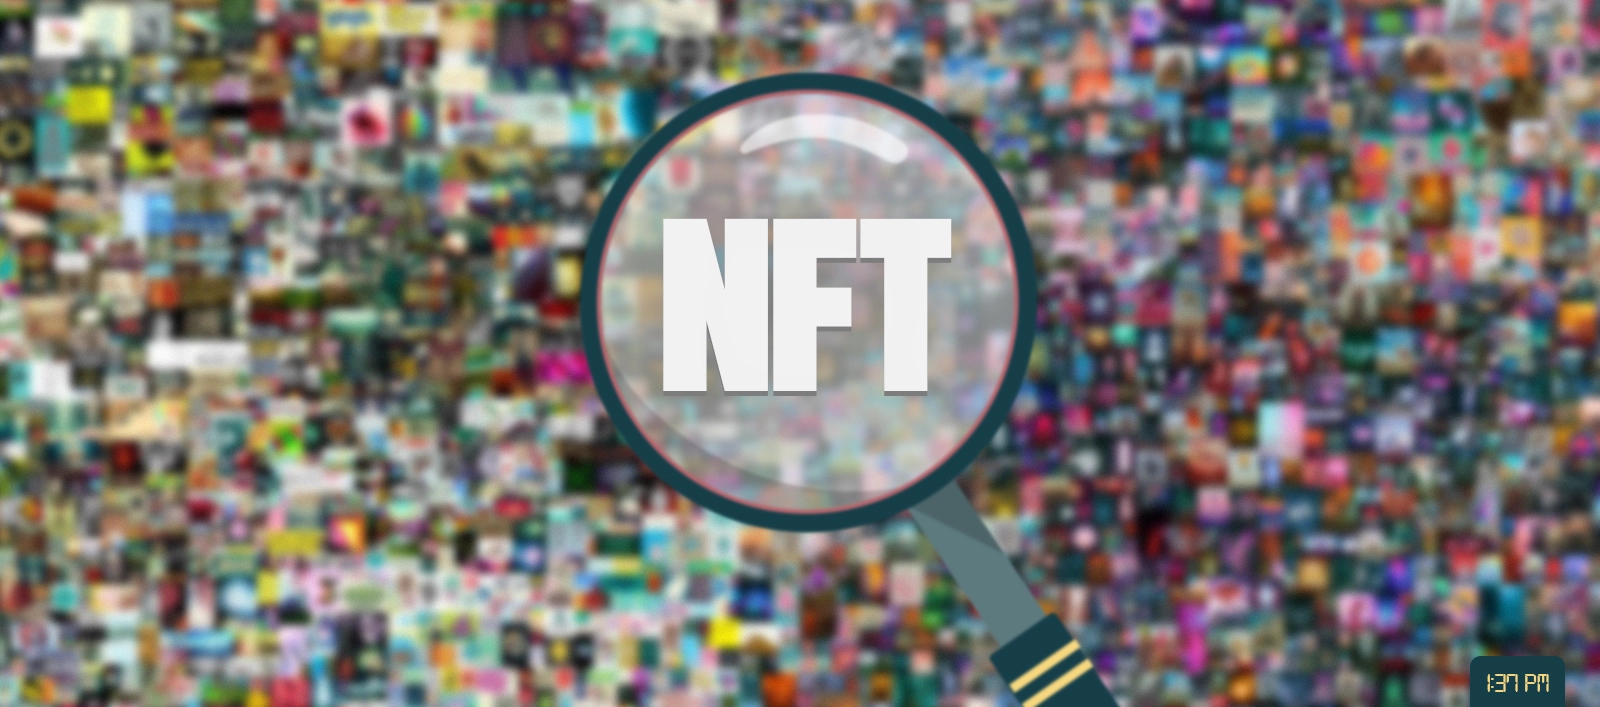 Top 10 NFT Project